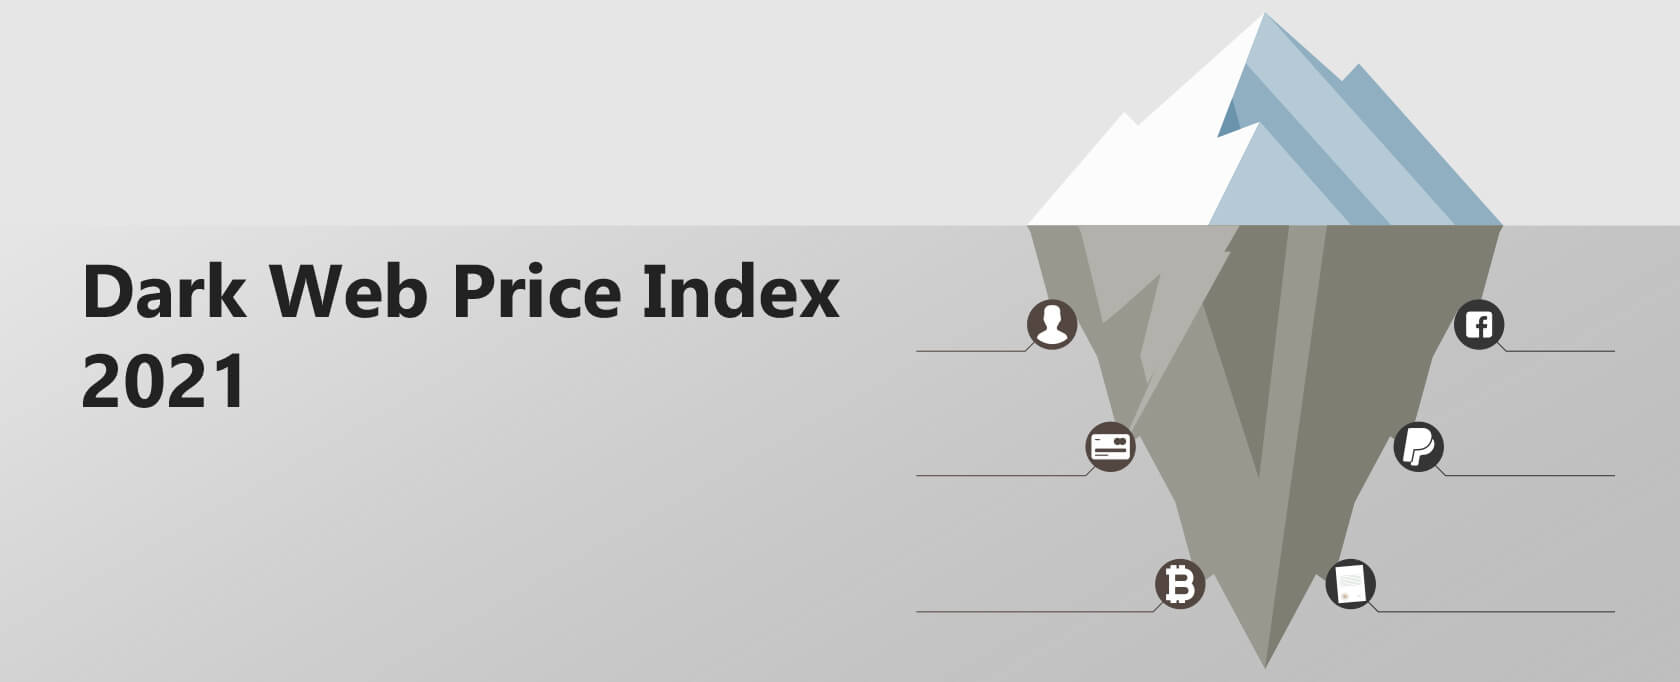 Dark Web Price Index 2021 - Dark Web Prices of Personal Data